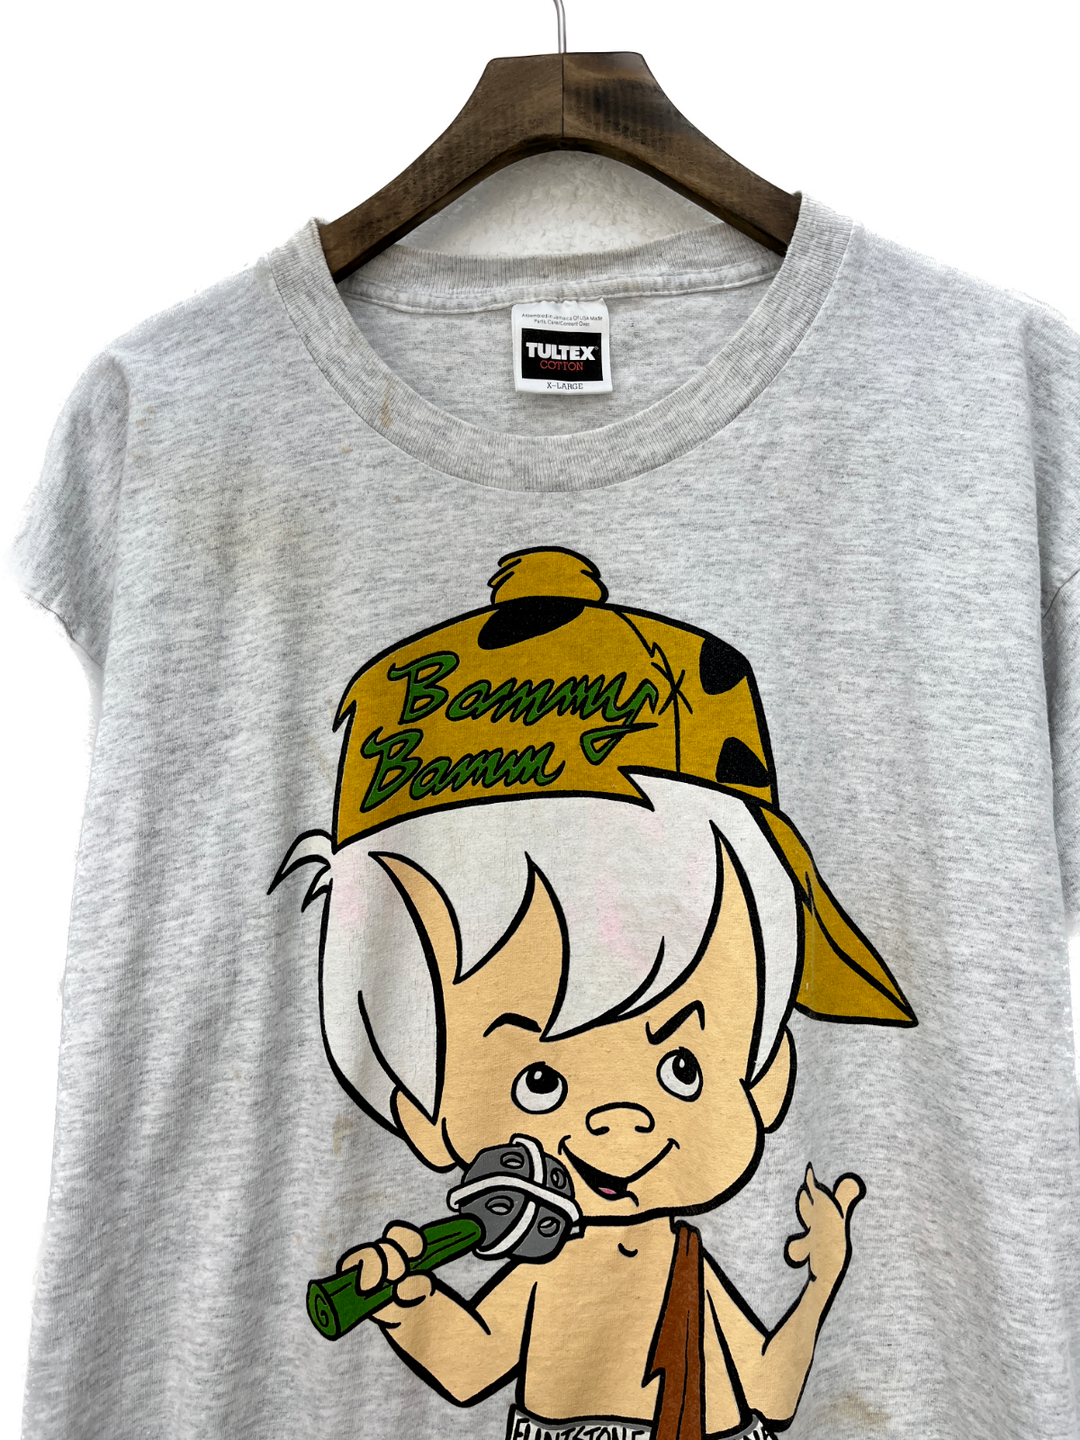 1993 The Flintstones Cartoon Bamm Bamm Vintage Graphic T-shirt Size XL Gray